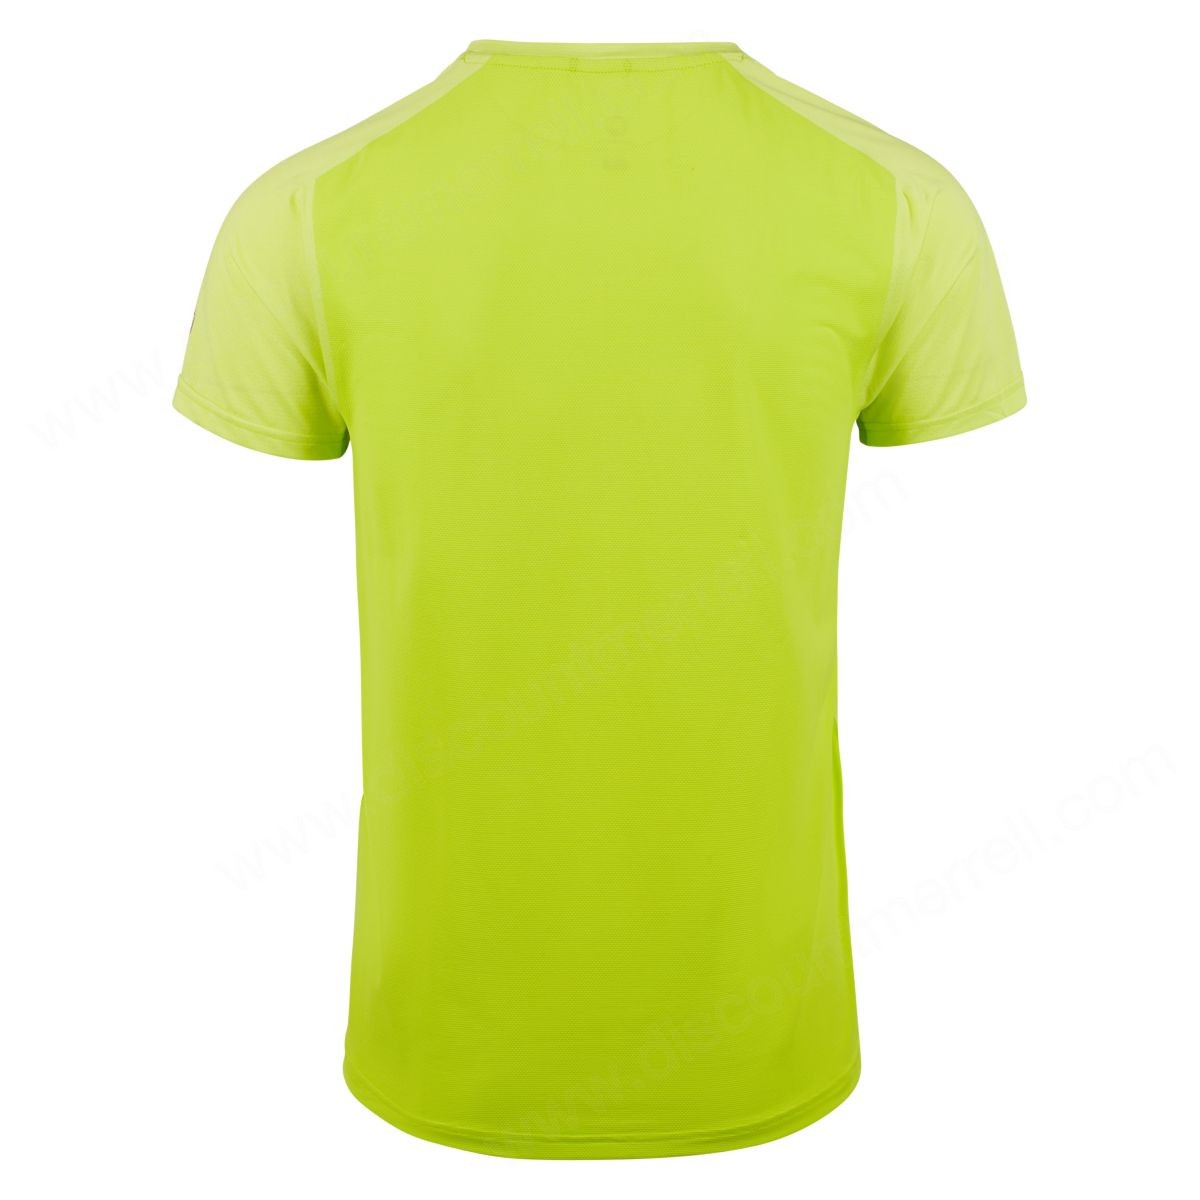 Merrell Mens's Torrent Short Sleeve Wicking Tech T-Shirts Acid Lime Heather - -1